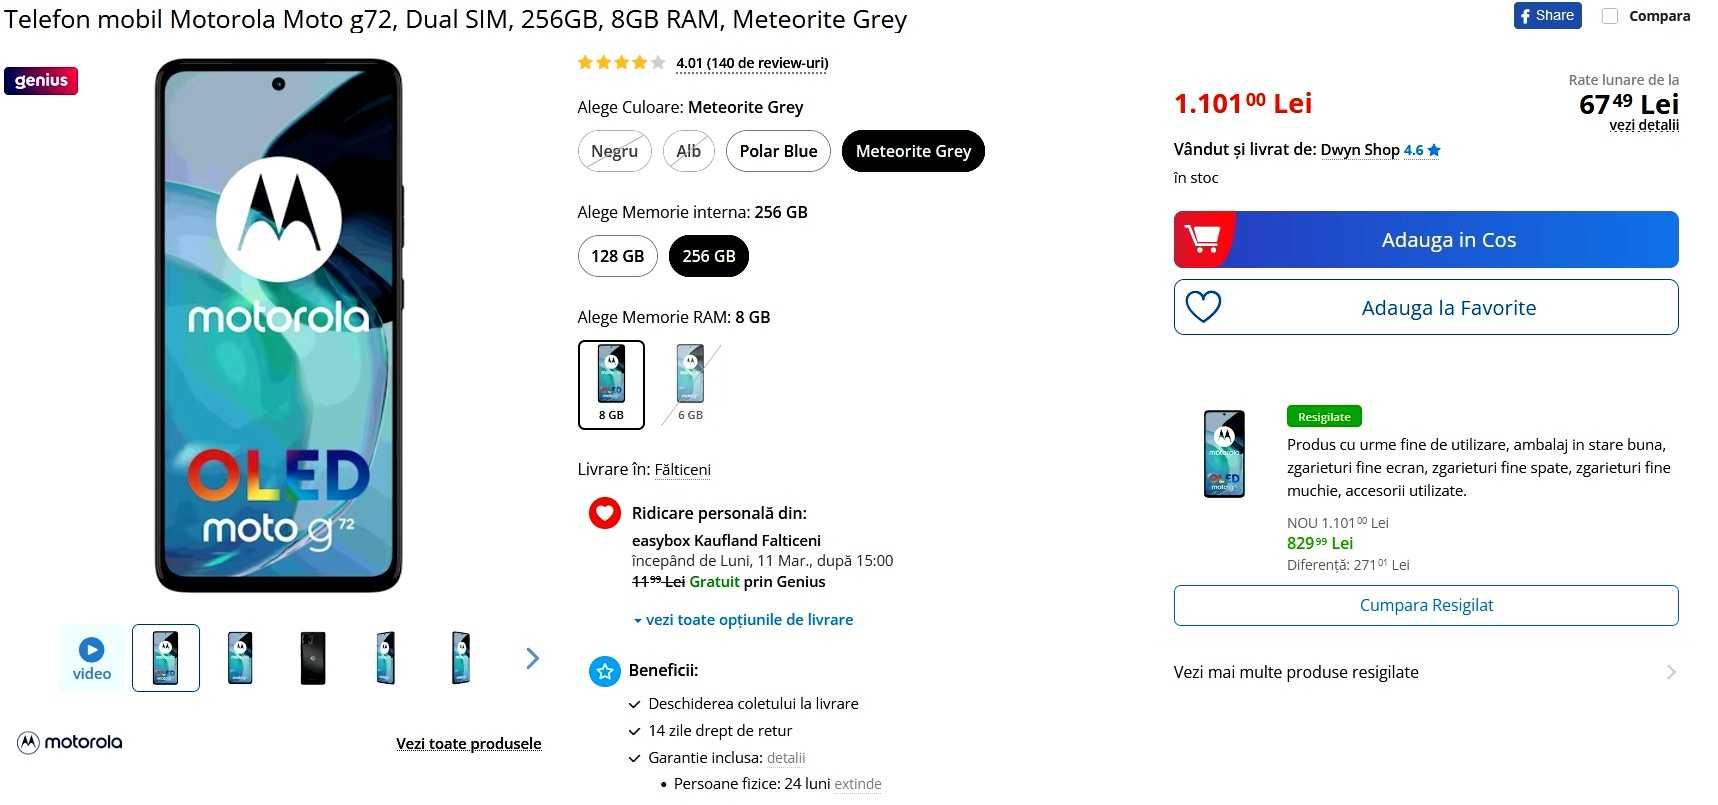 Smartphone Motorola Moto g72 Dual SIM 256GB 8GB RAM nou garantie 2 ani